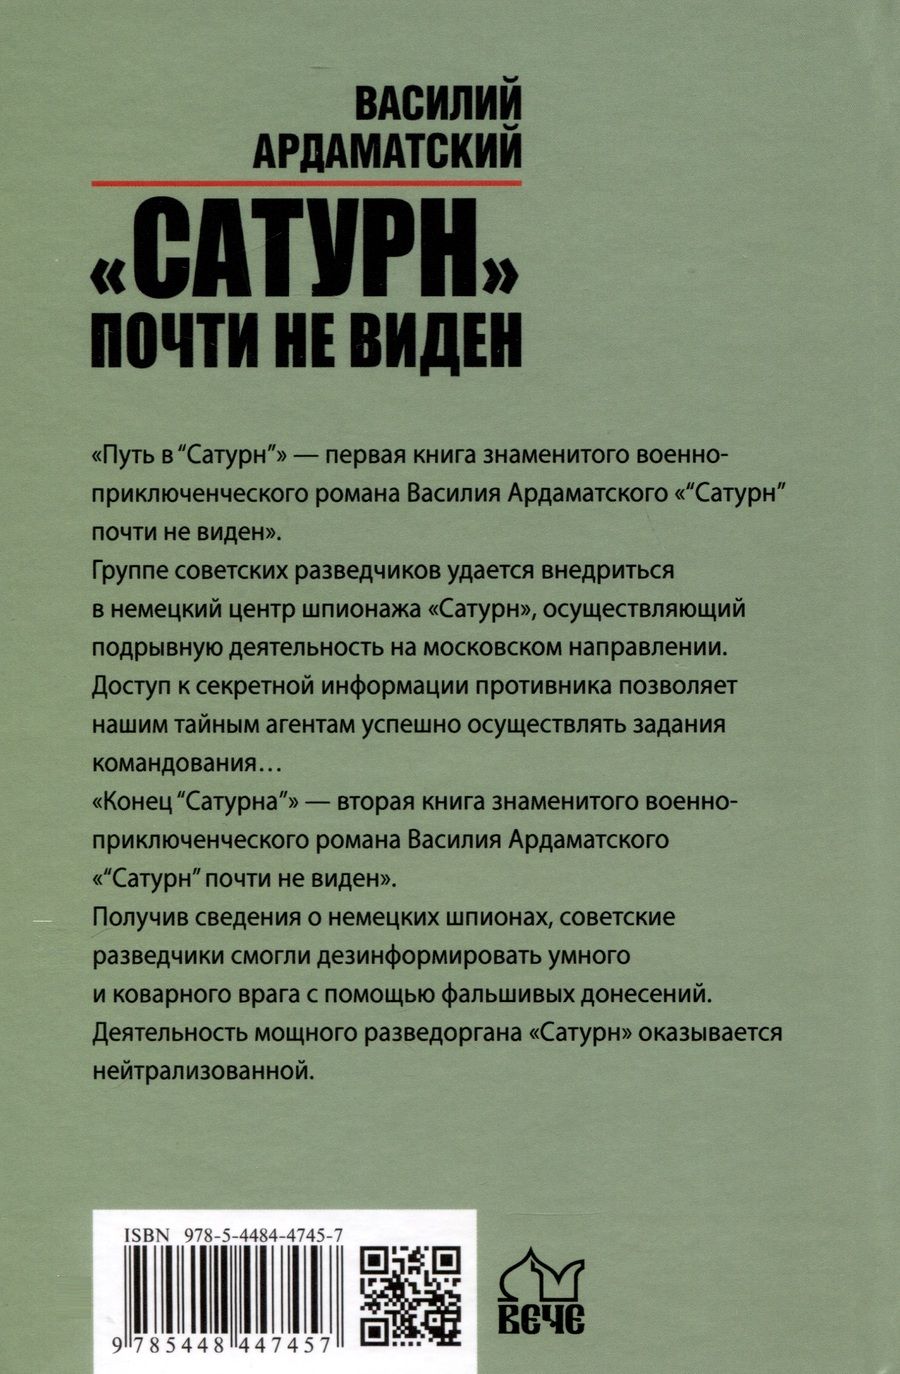 Обложка книги "Ардаматский: "Сатурн" почти не виден"